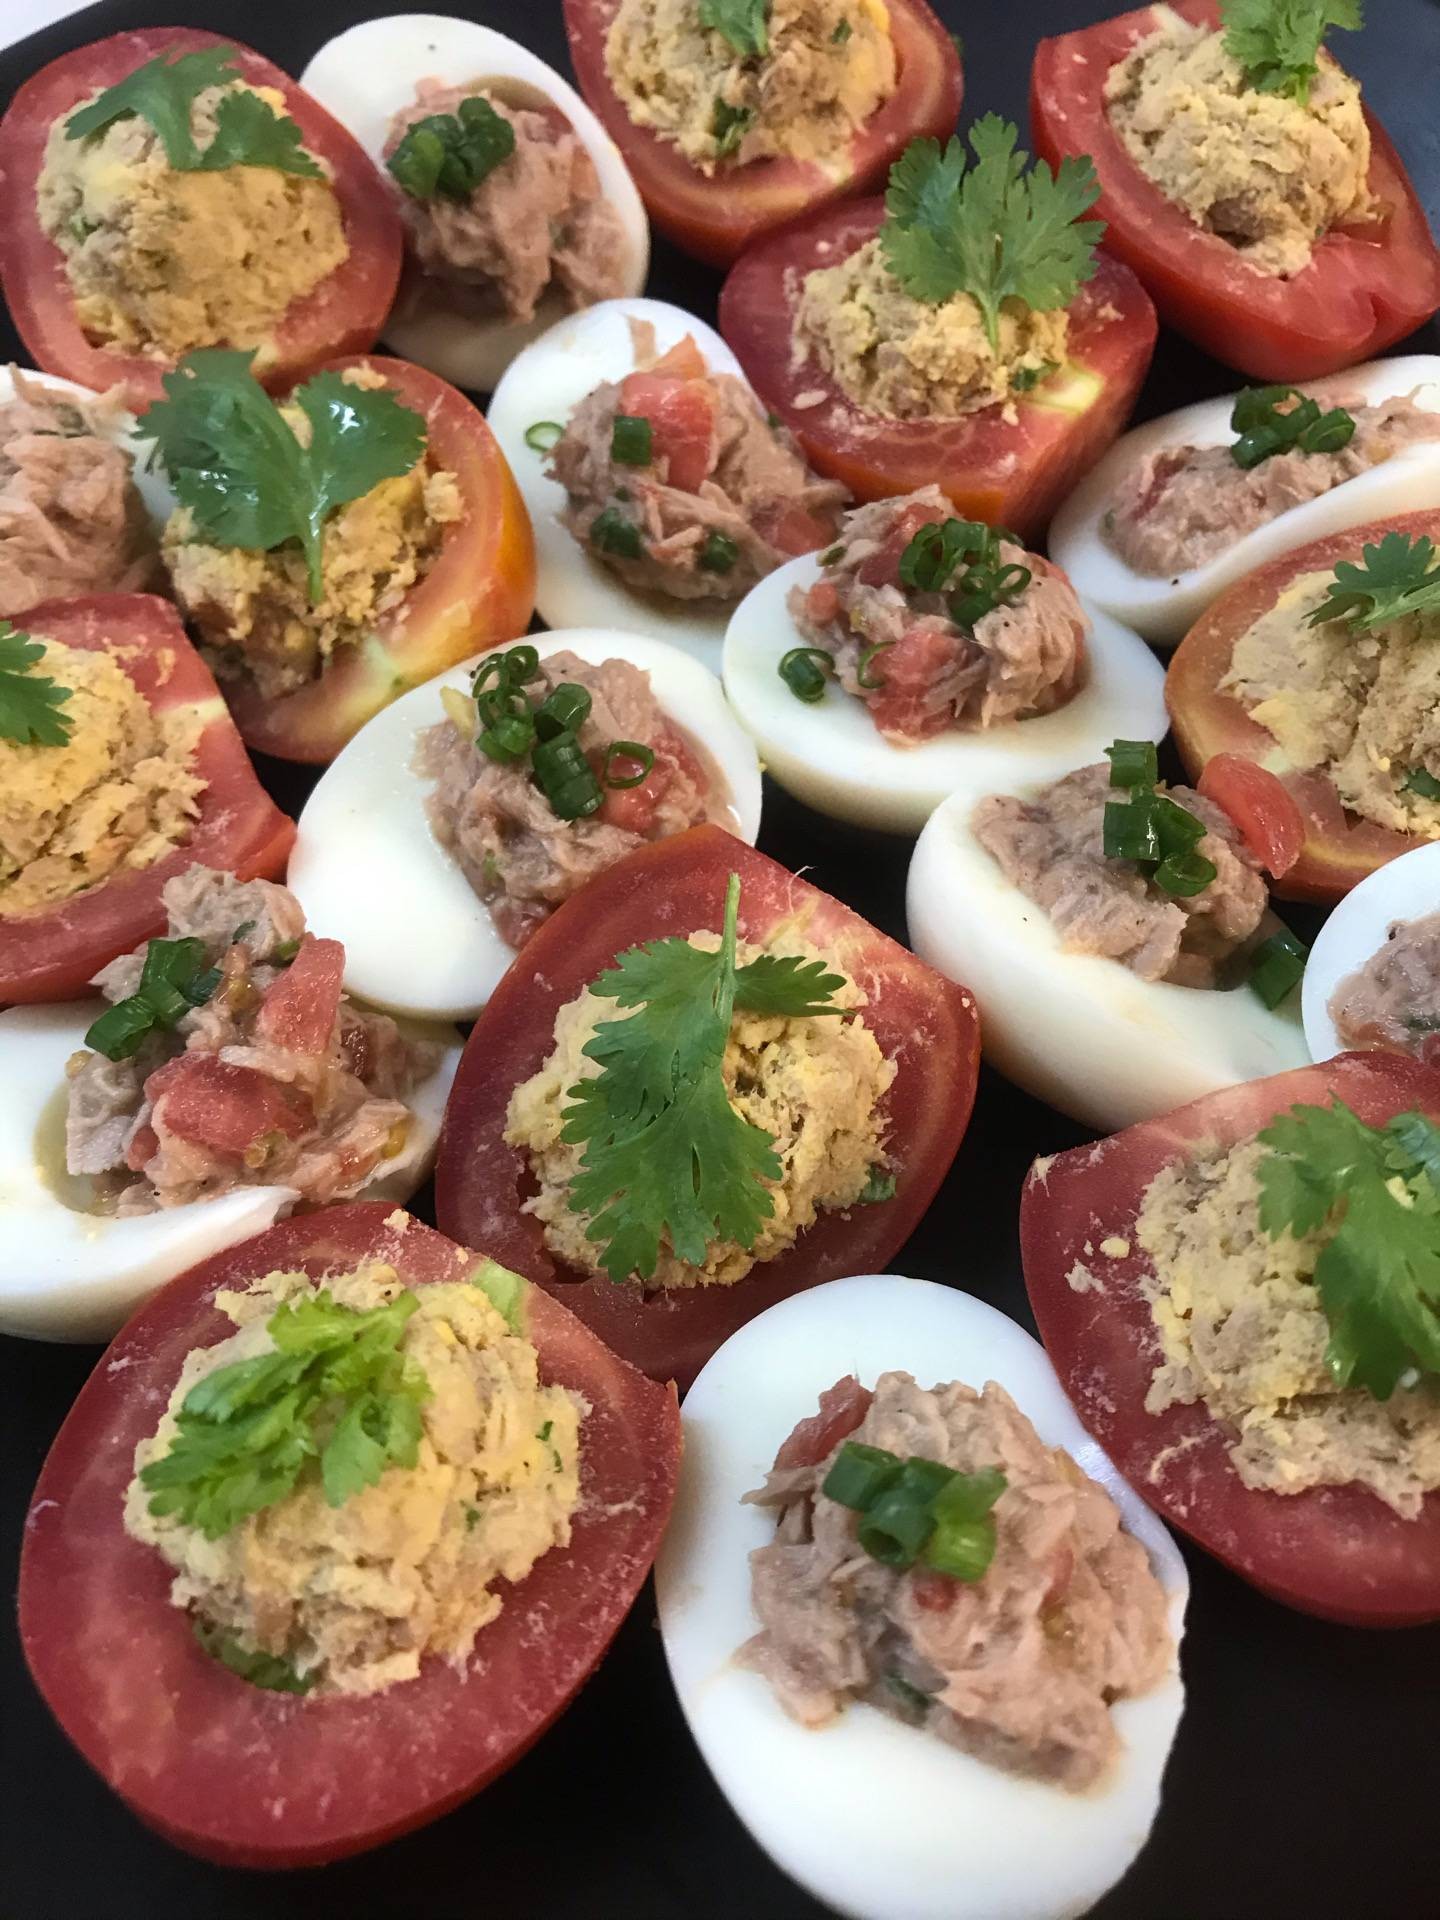 Tuna salad in egg & tomato cup